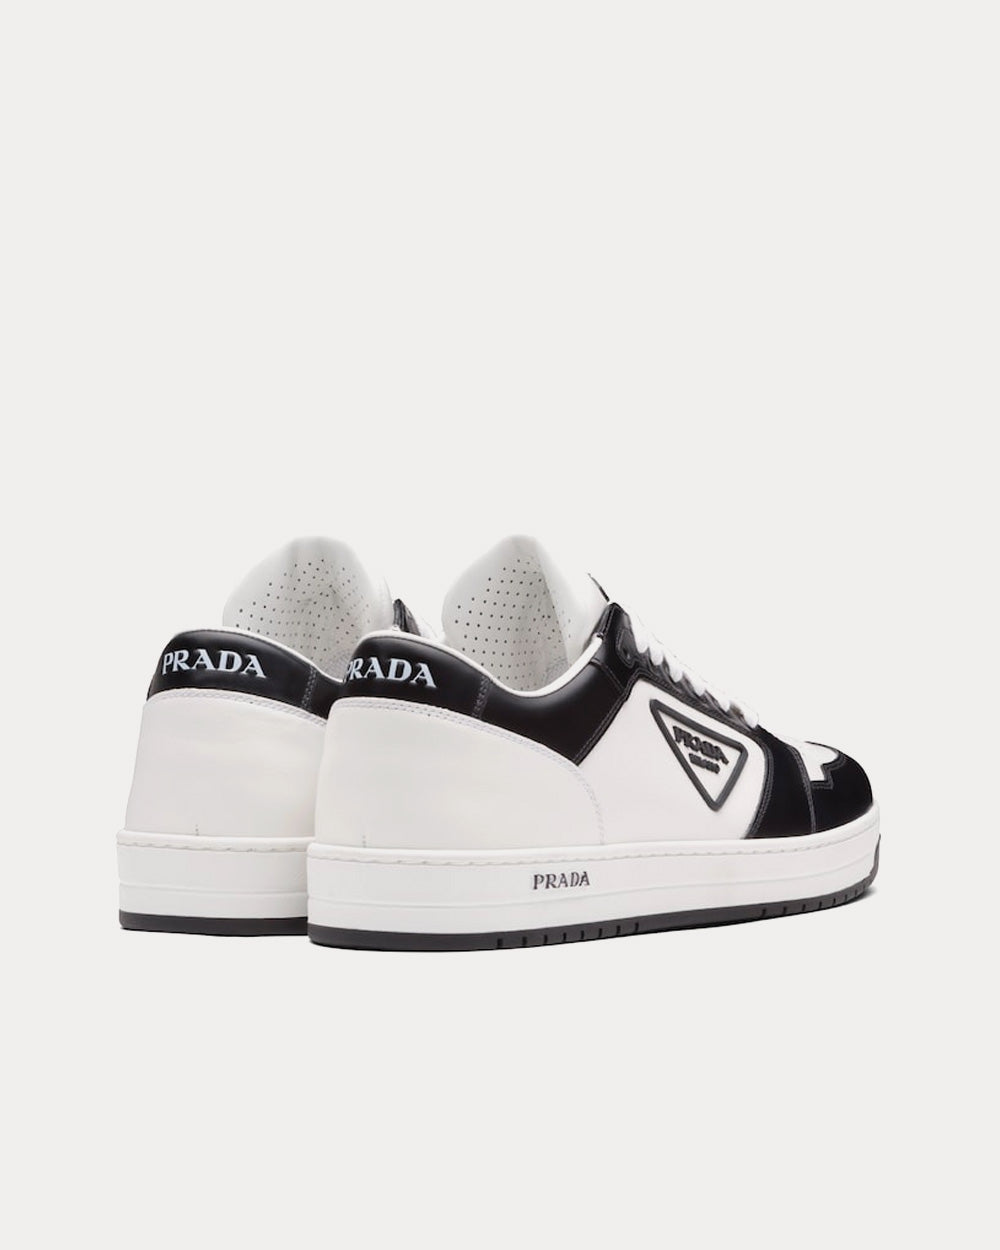 Prada - Sporty Leather Black / White Low Top Sneakers